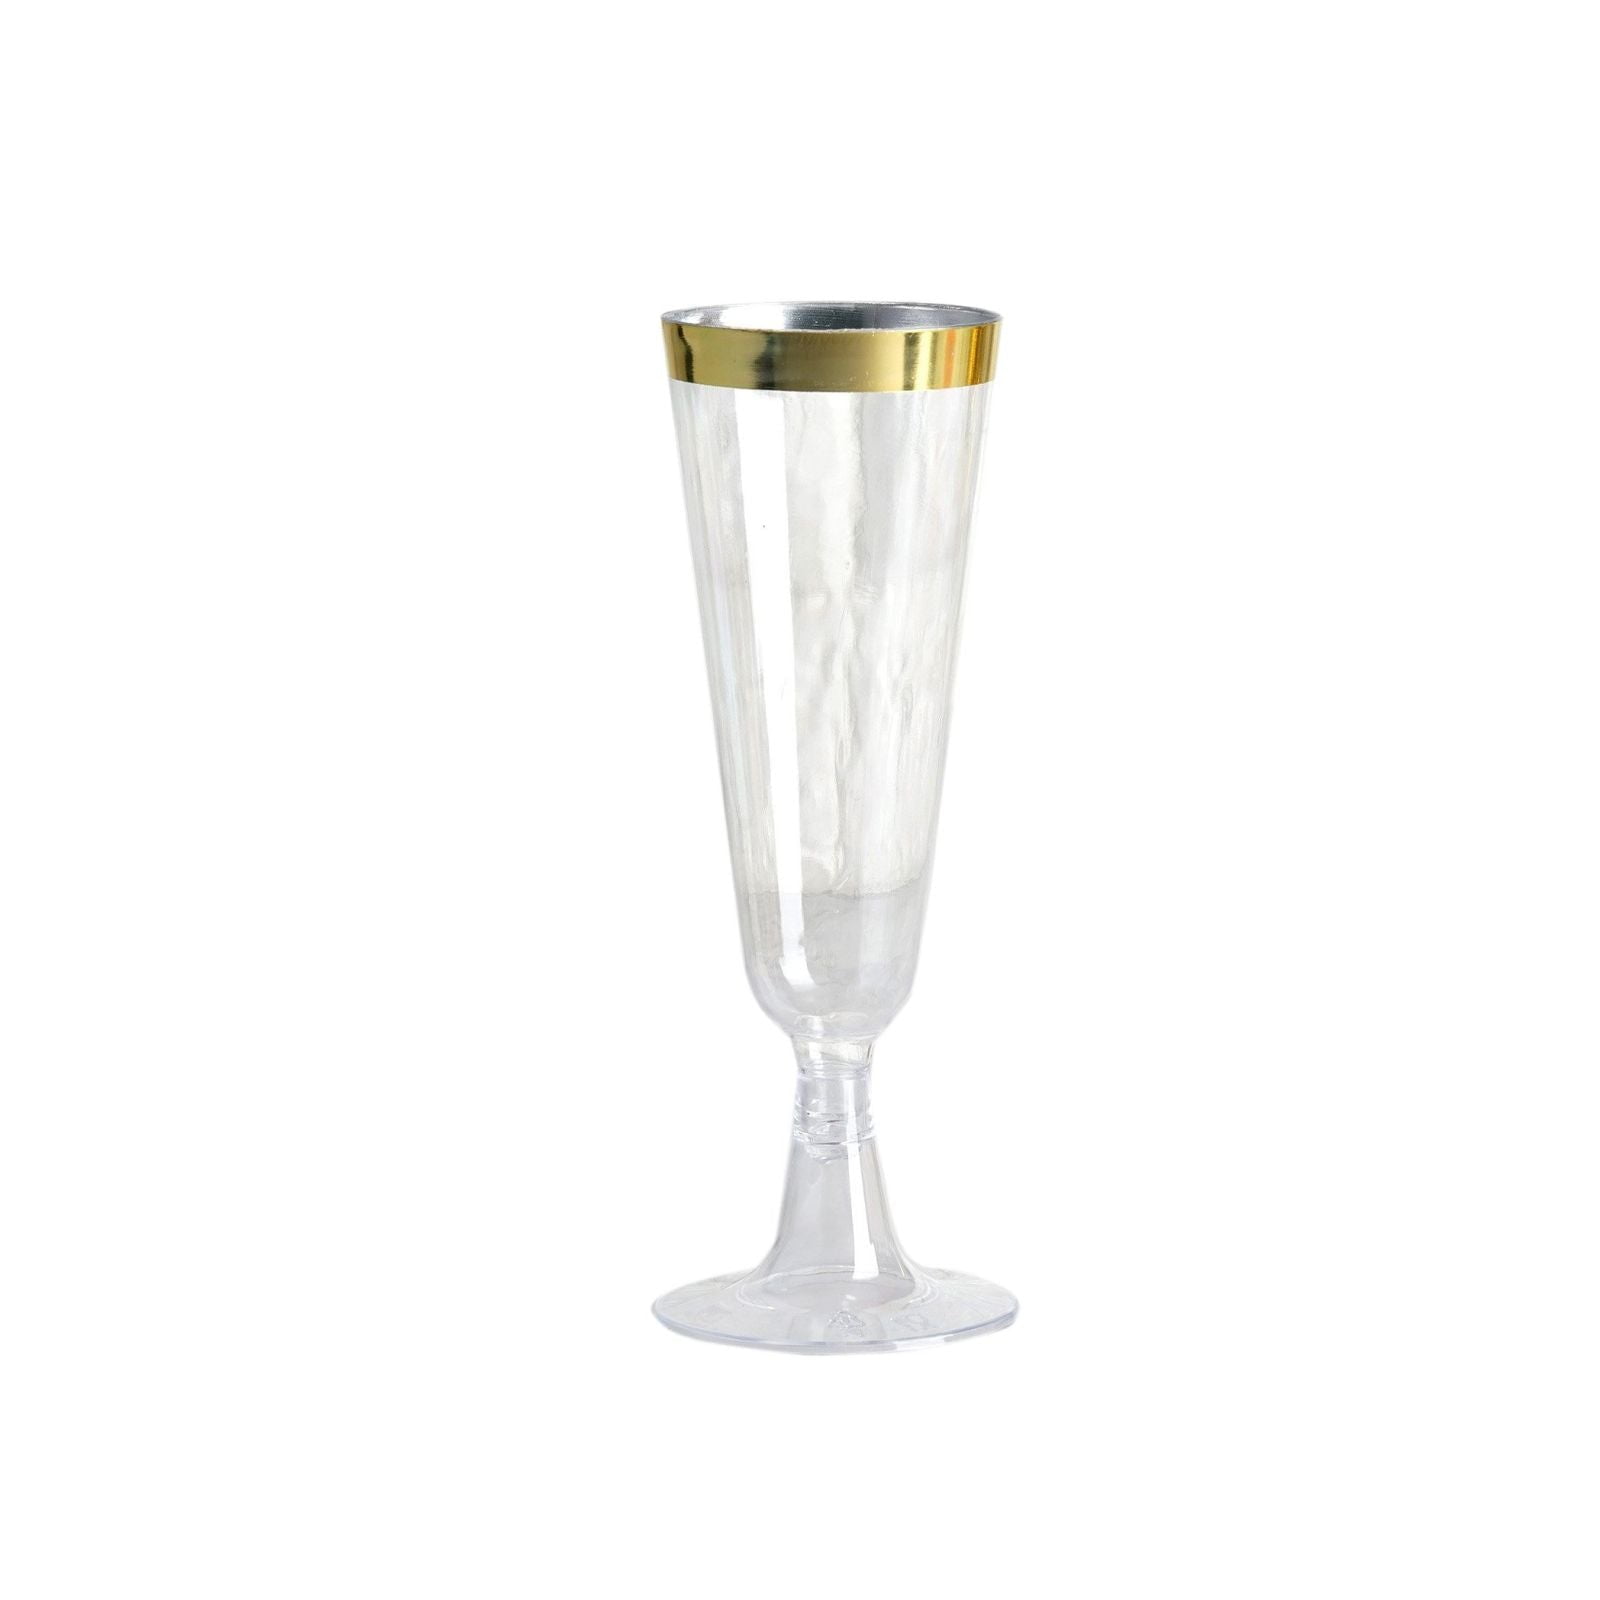 Munfix 50 Pack Gold Rimmed Plastic Champagne Flutes 5 Oz Clear Plastic  Toasting Glasses Fancy Dispos…See more Munfix 50 Pack Gold Rimmed Plastic